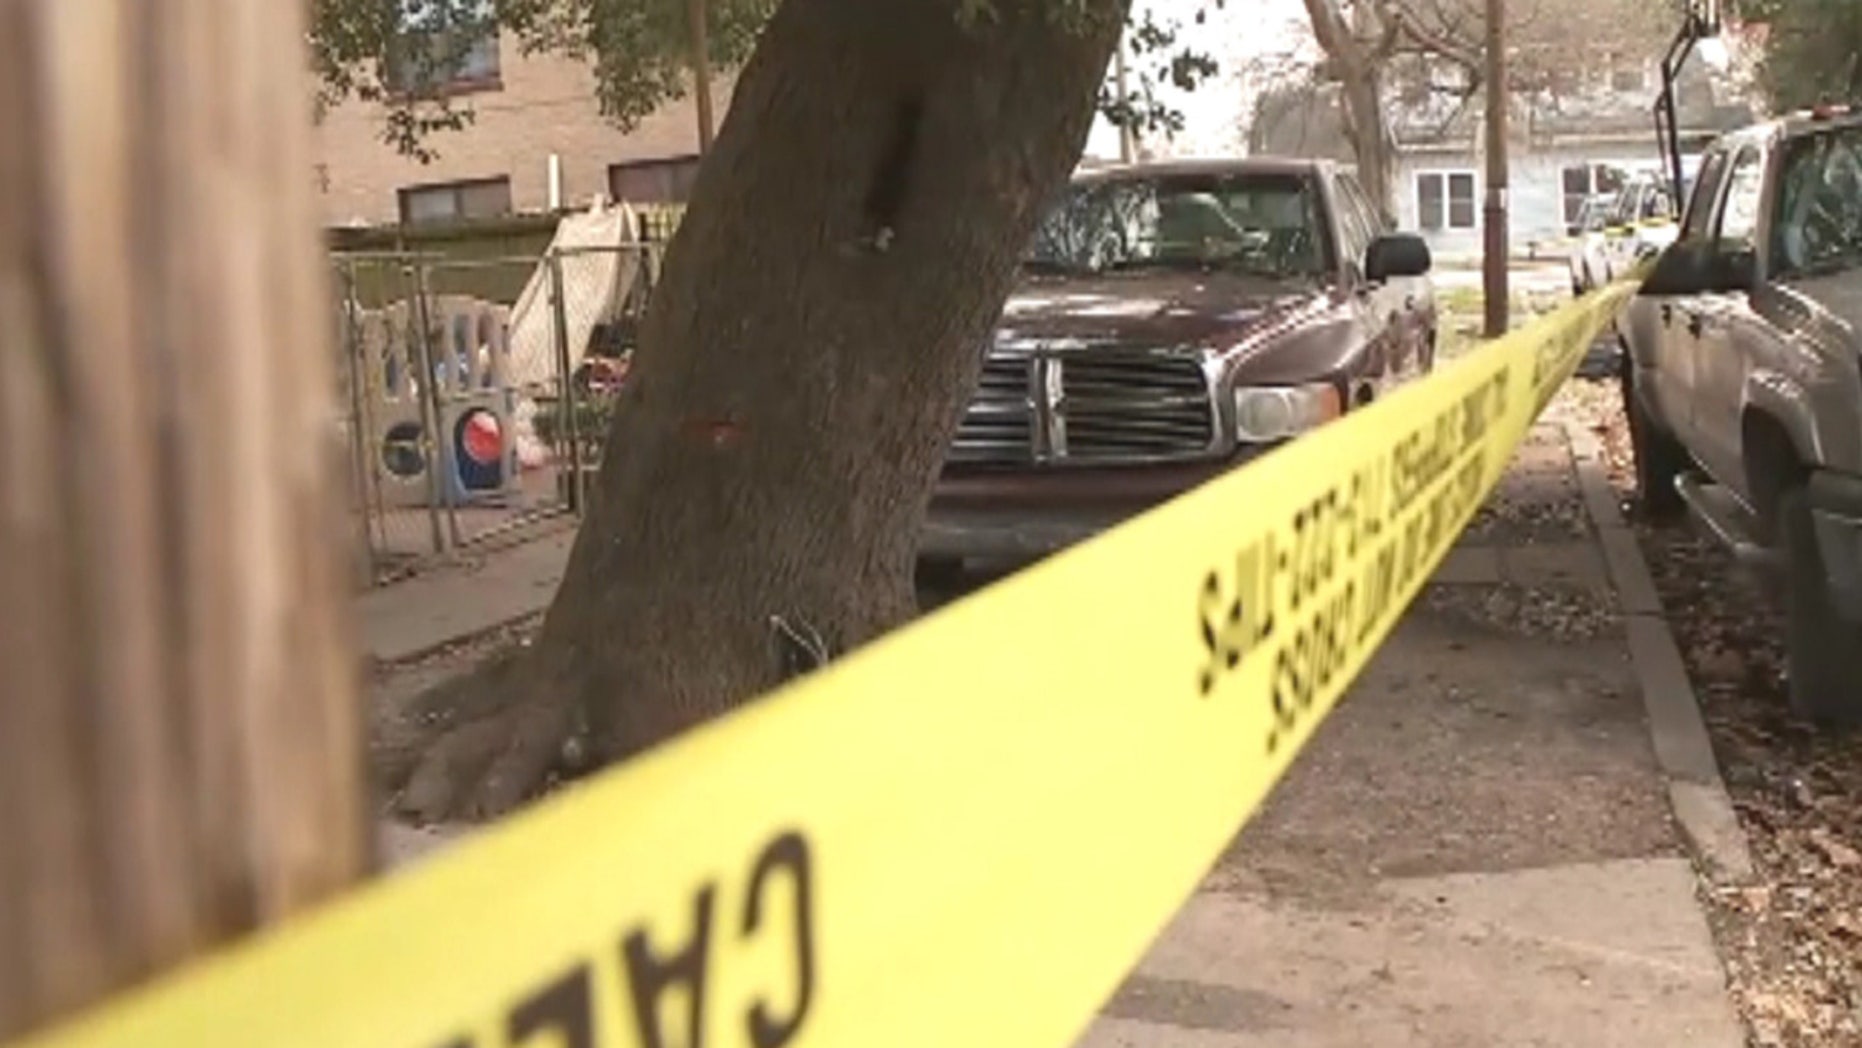 Texas homeowner shoots, kills 3 men and injuries 2 during home invasion, officials say